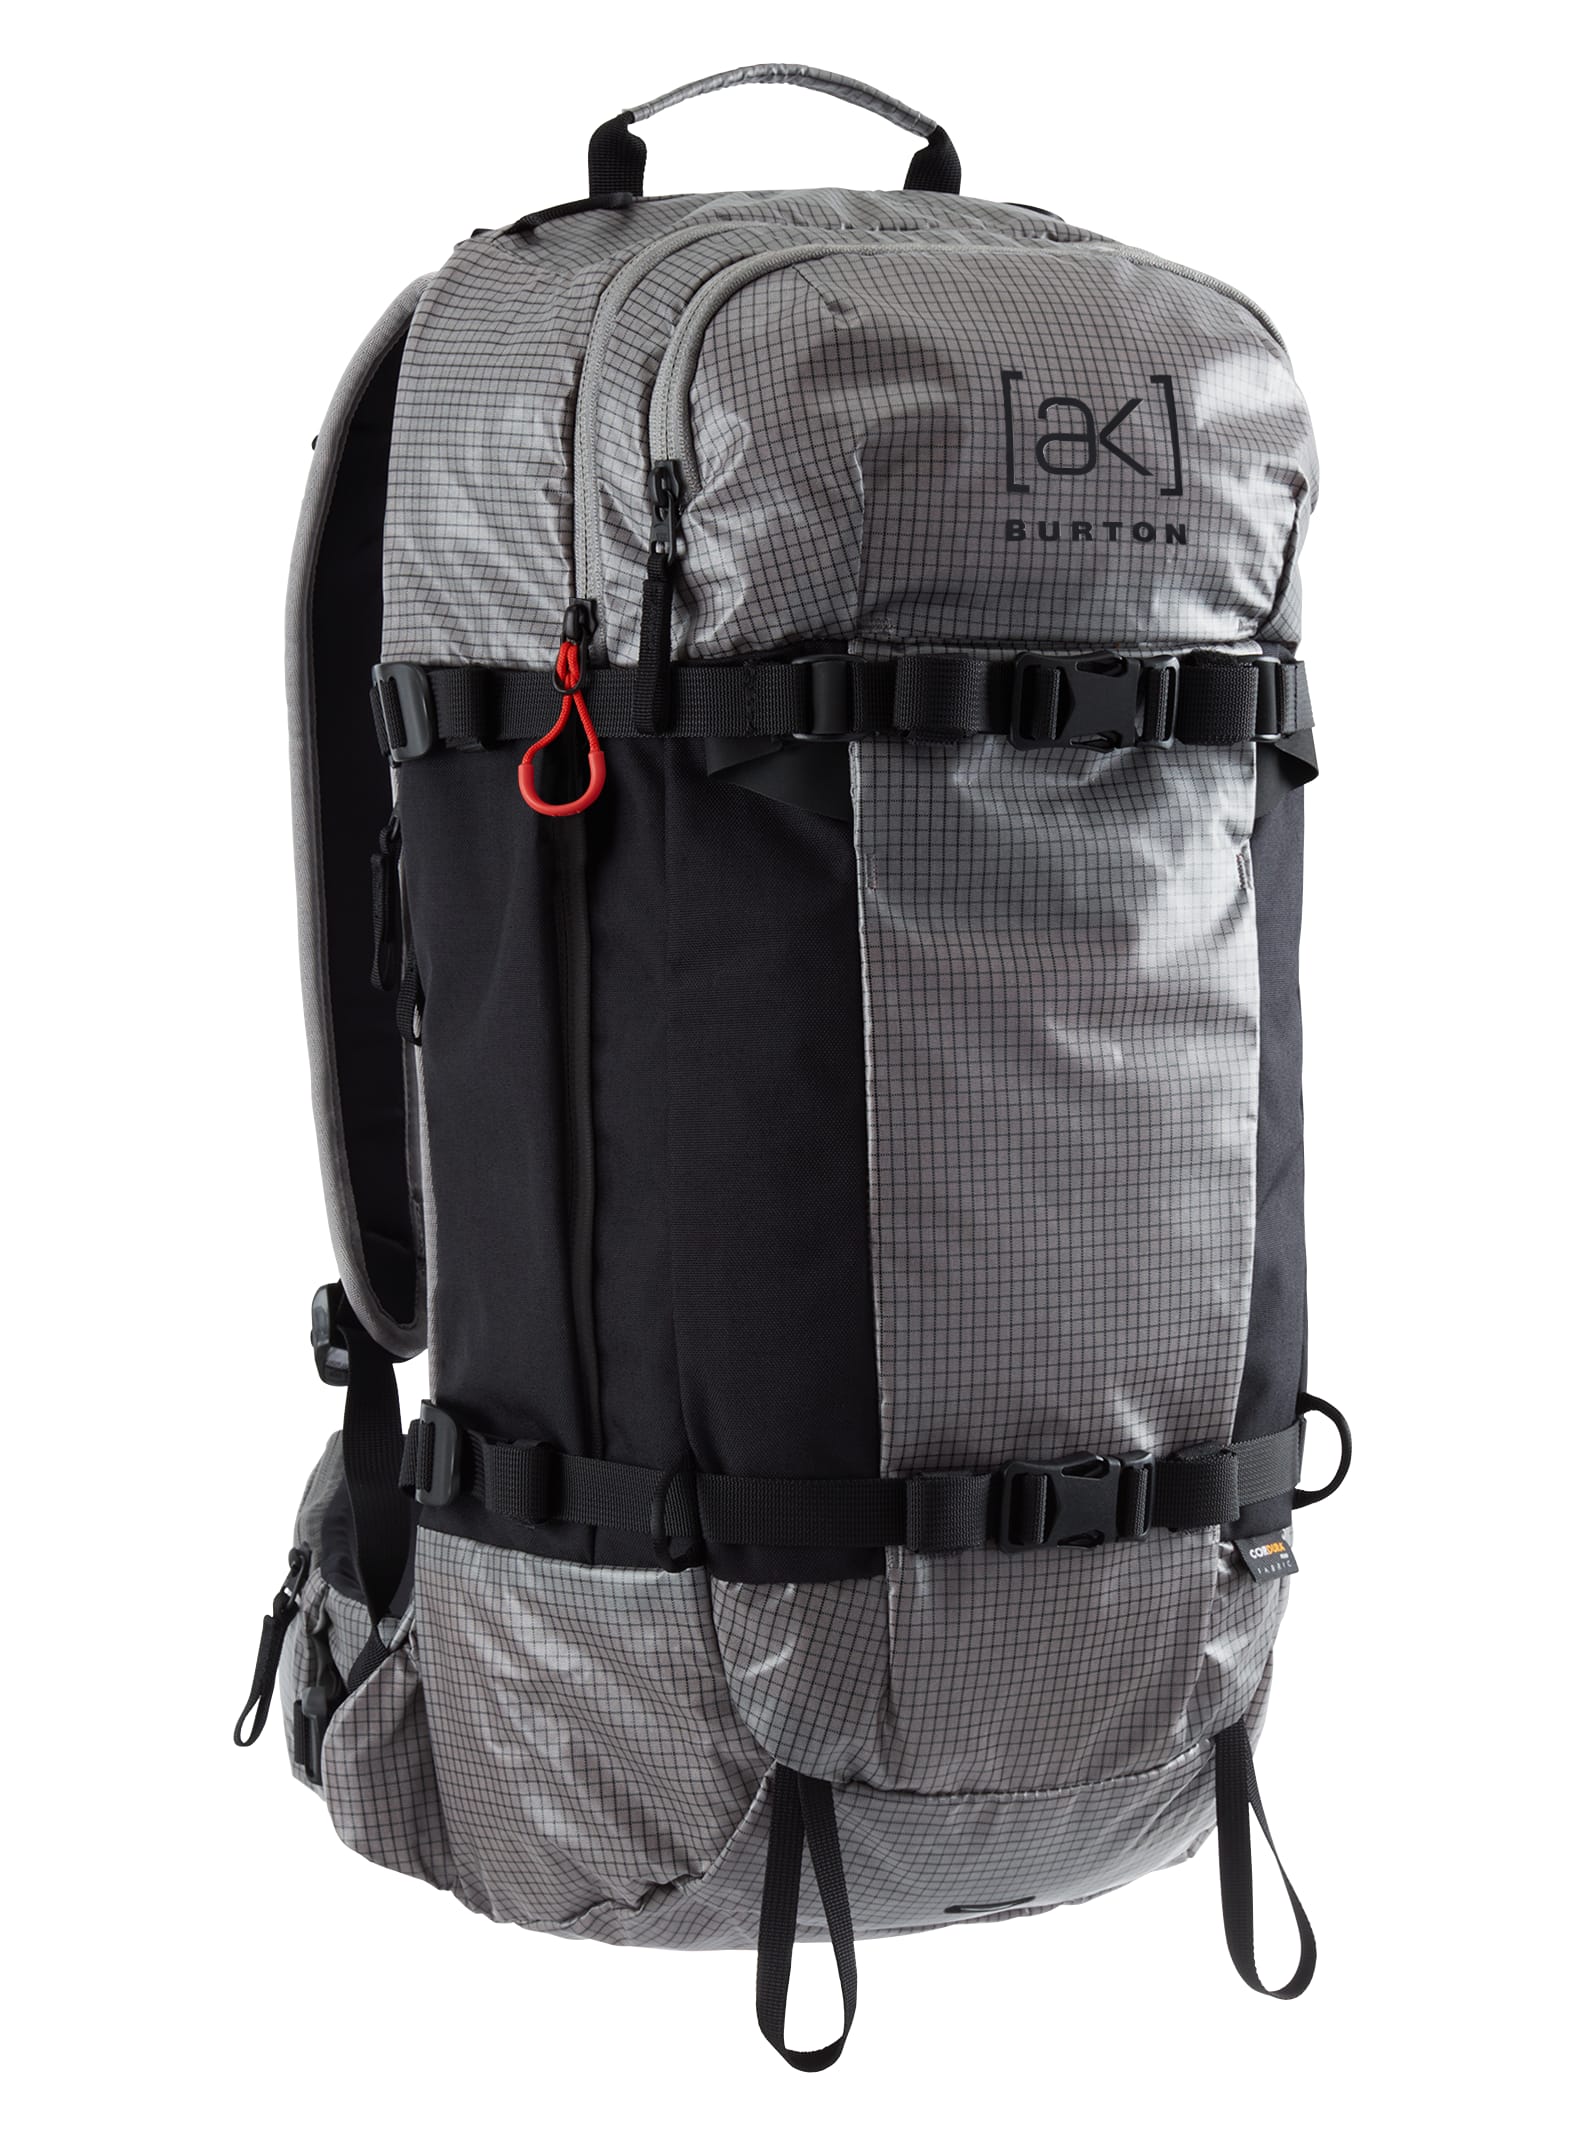 Backpack Padded Straps & burton decal 165cm $120 ANEX Snowboard Ski Travel Bag 